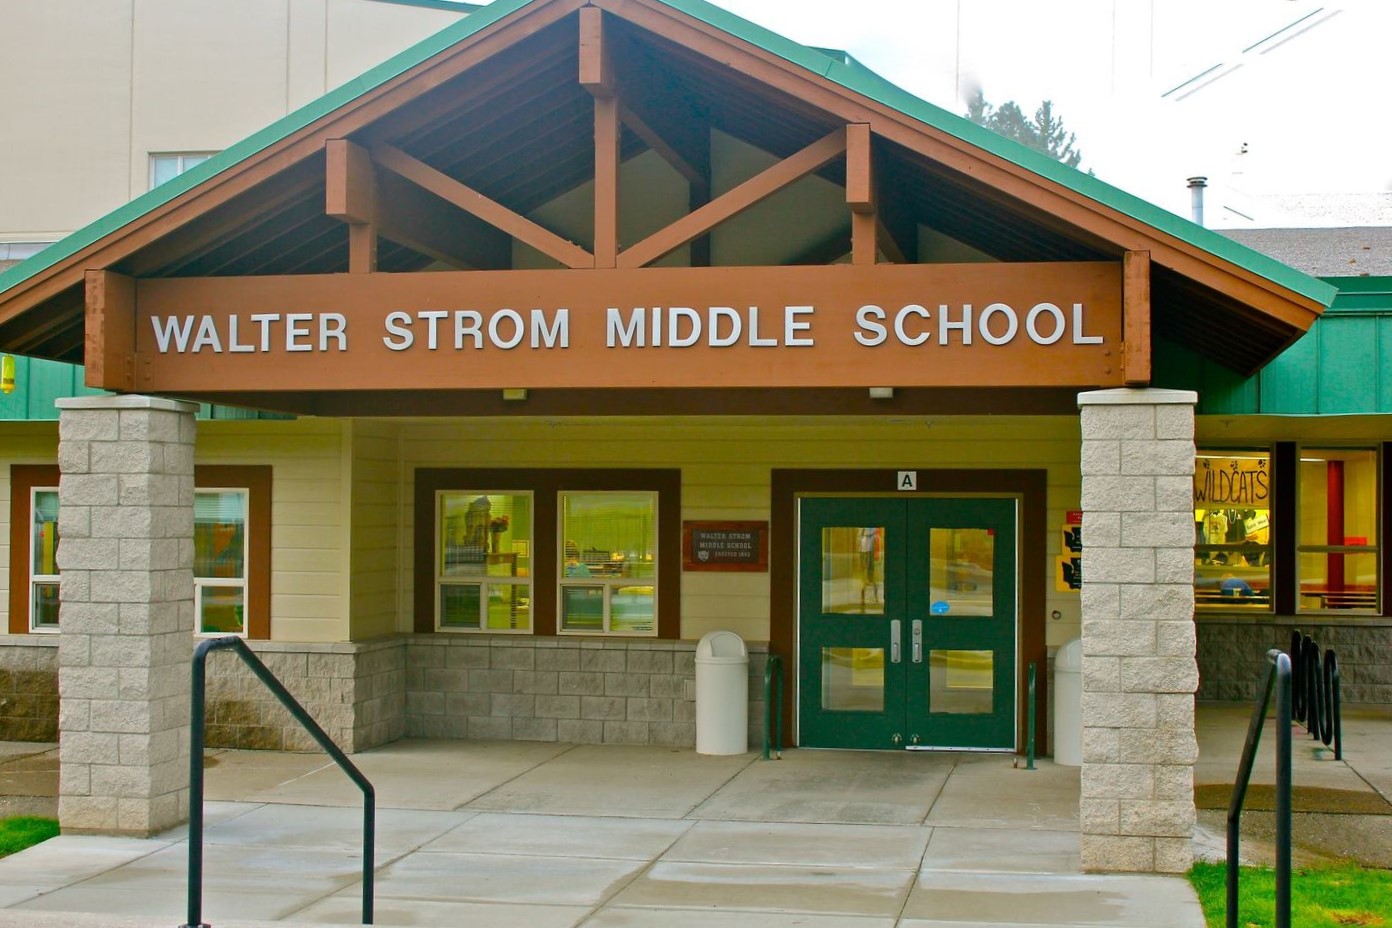 Walter Strom Middle School